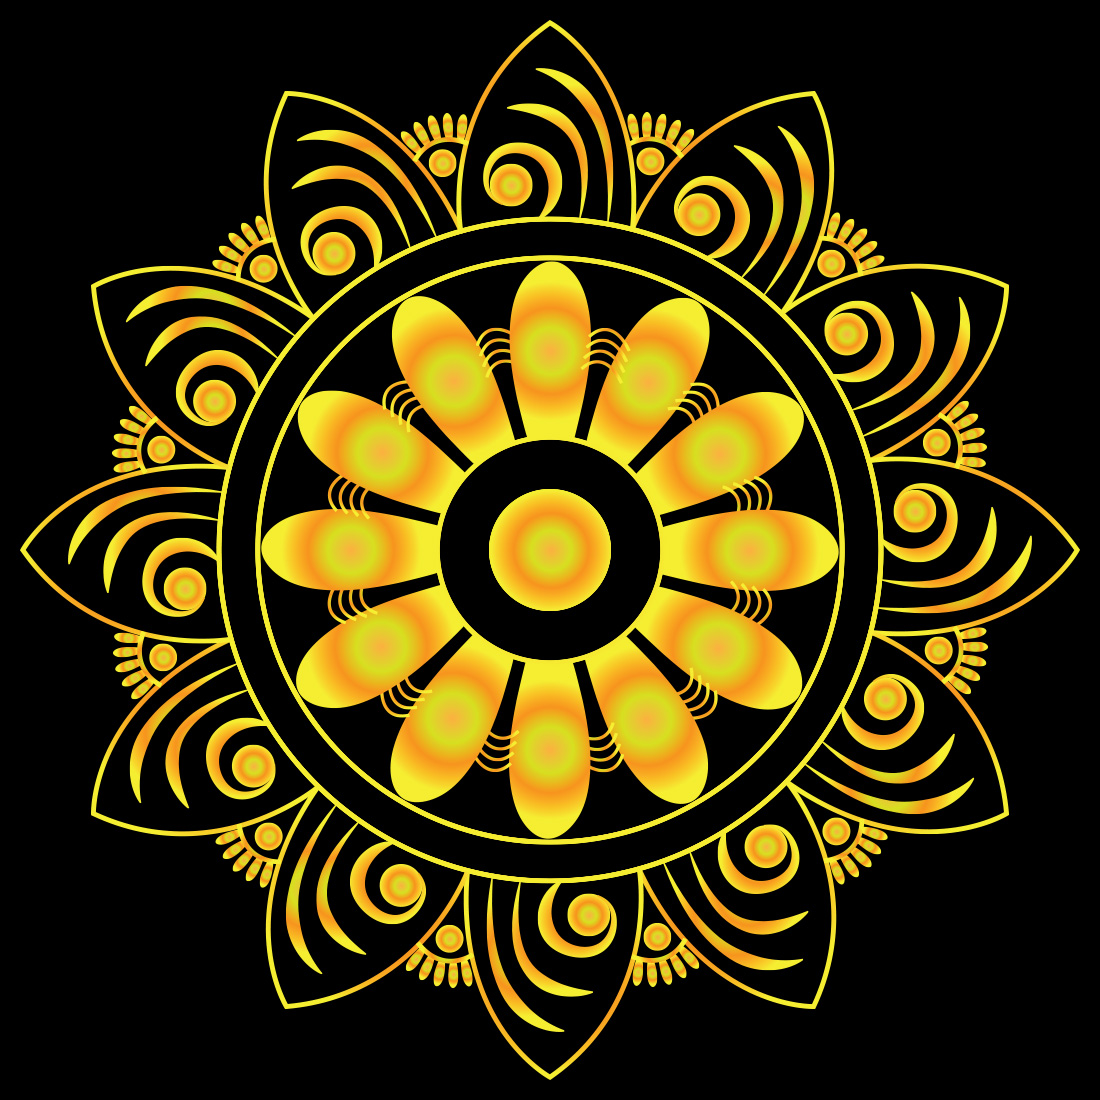 Mandala Design cover image.